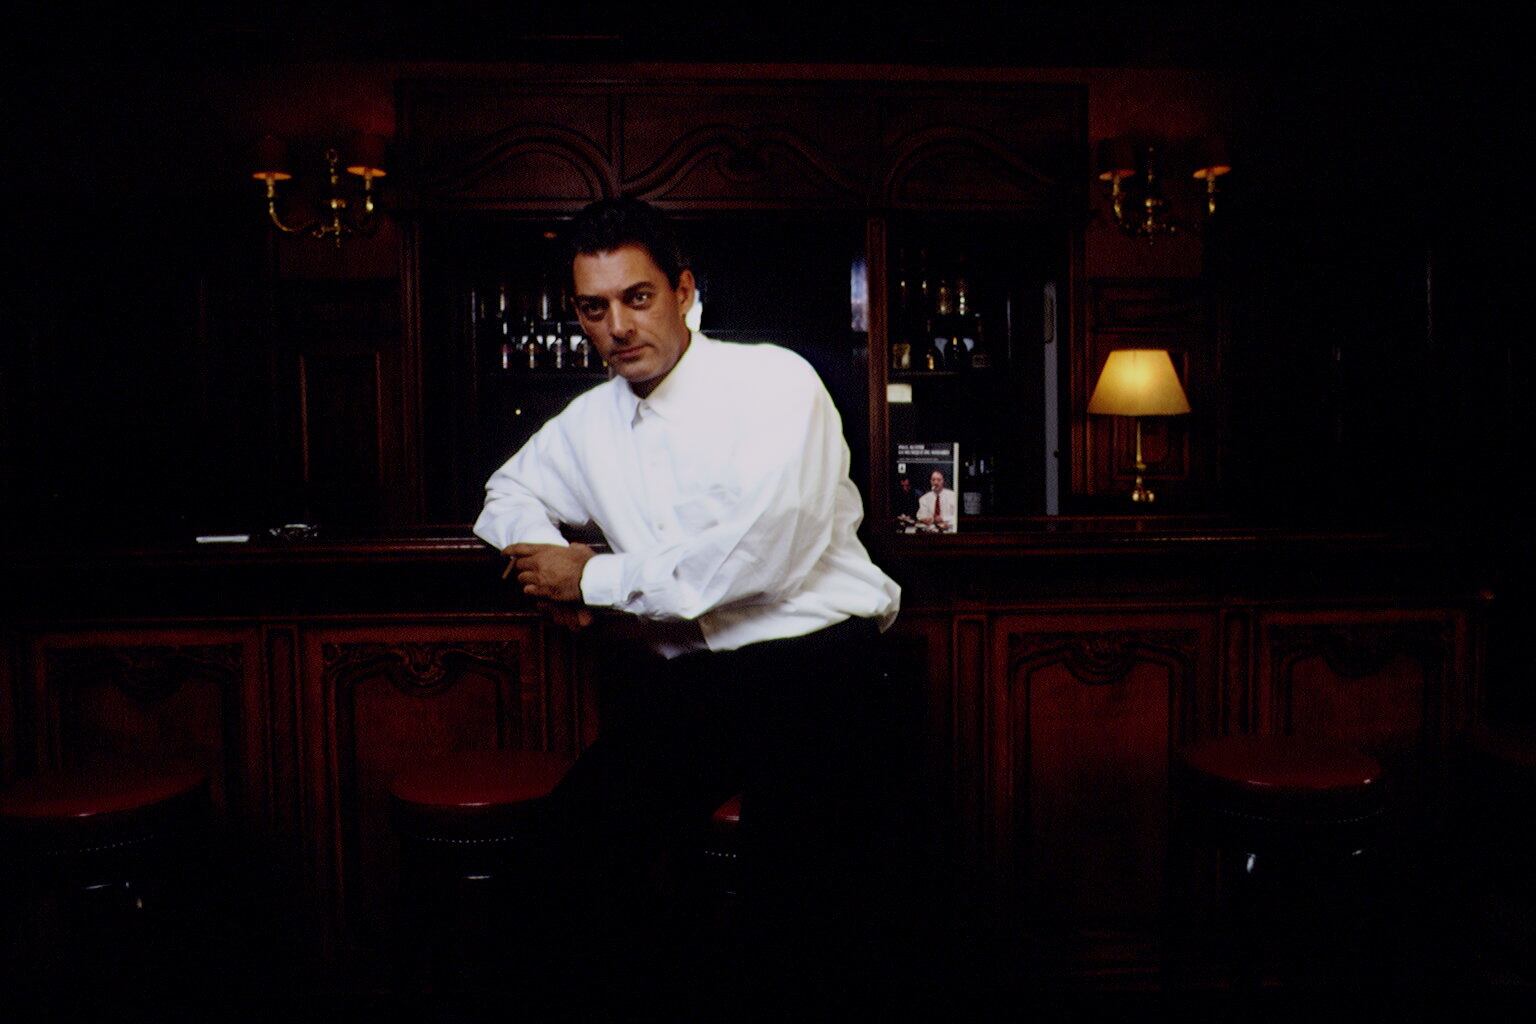 Paul Auster in Paris in 1993.